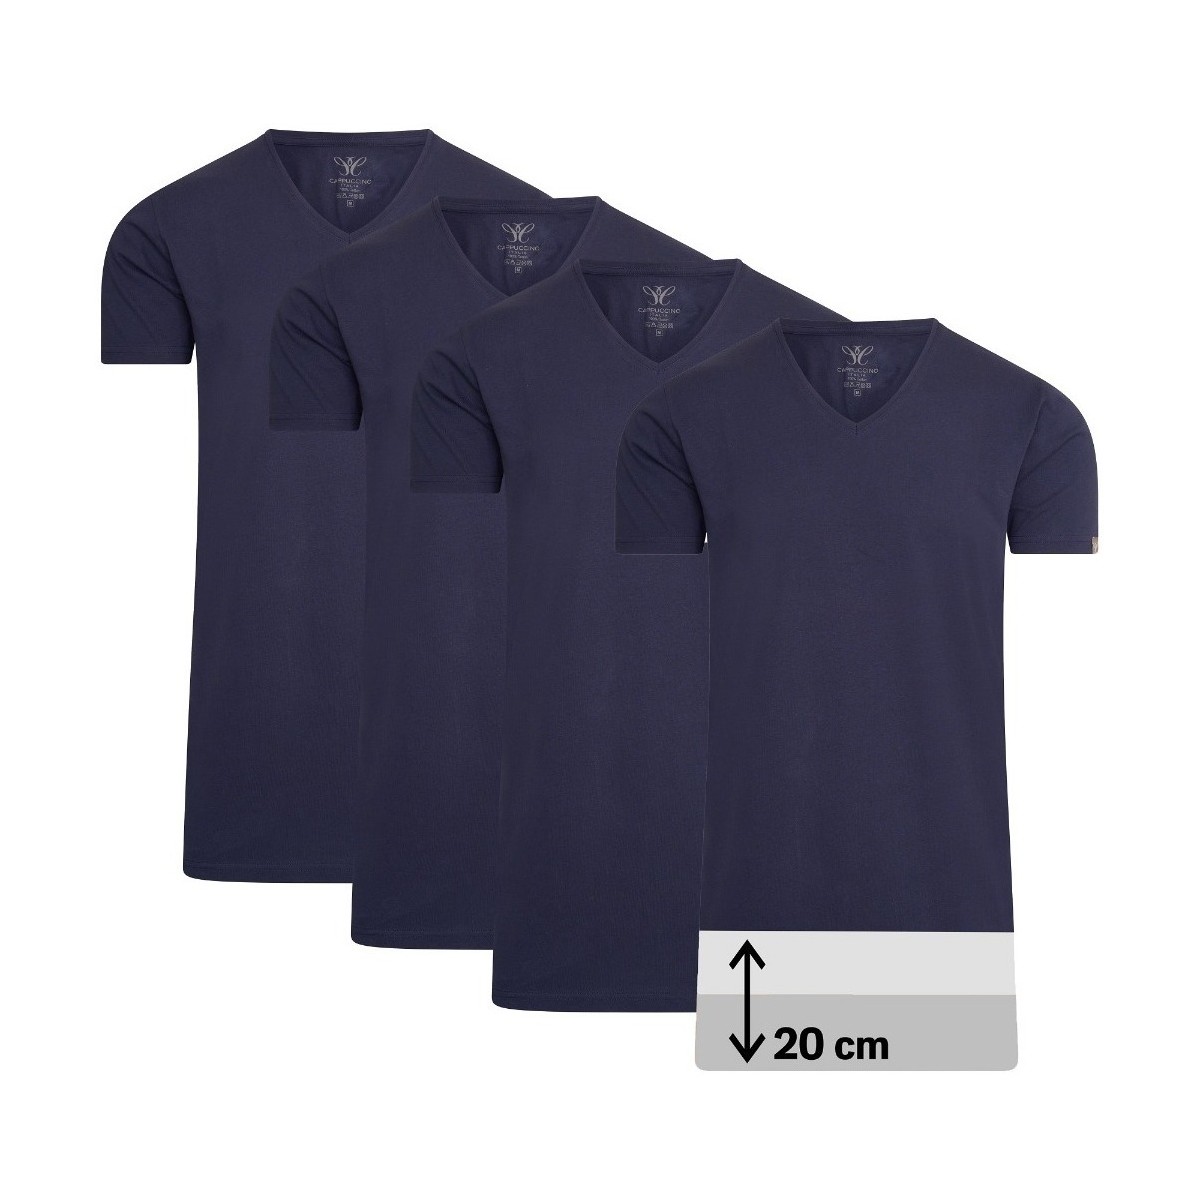 textil Hombre Camisetas manga corta Cappuccino Italia 4-Pack T-shirts Azul